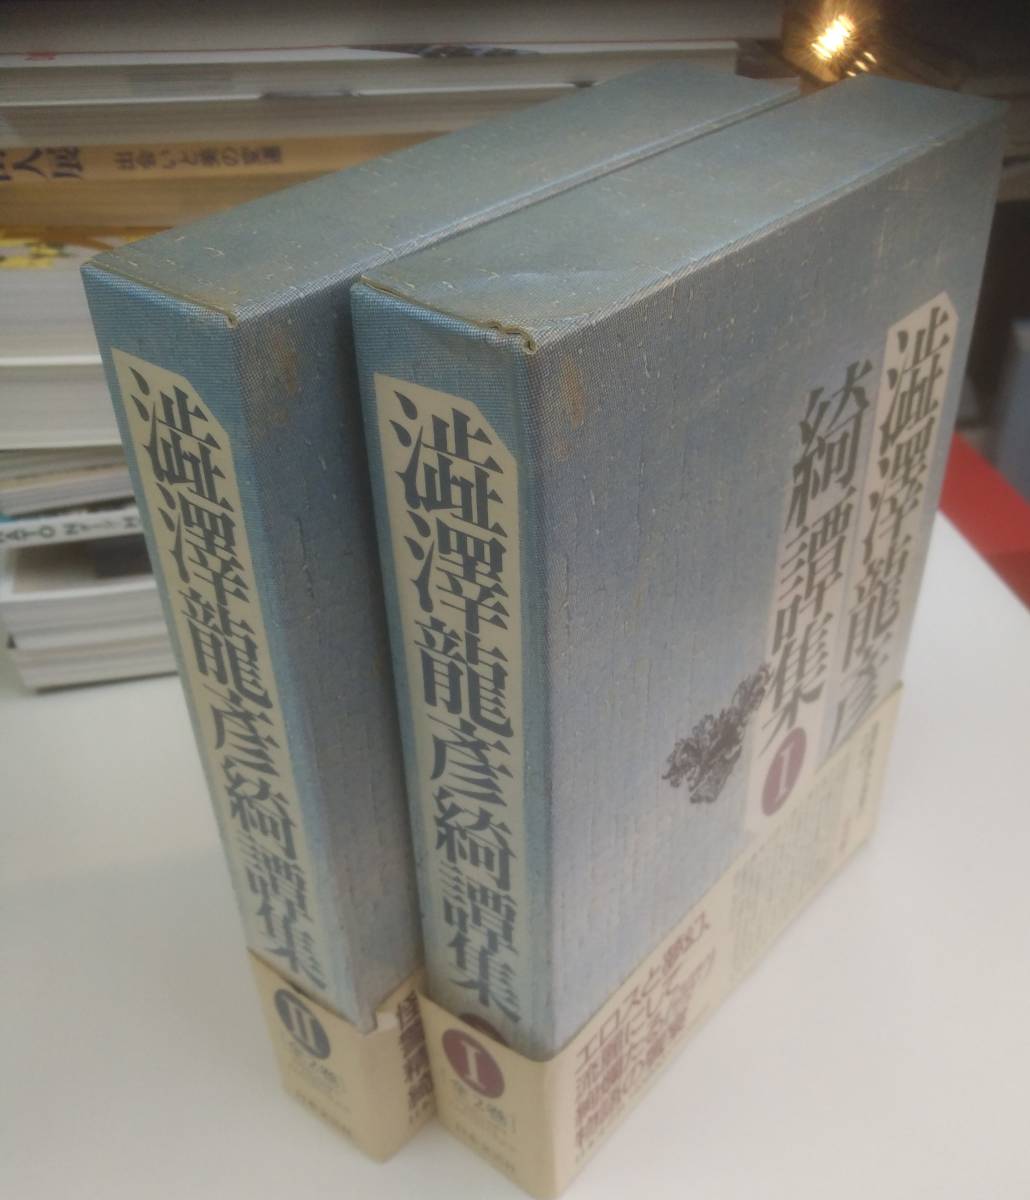 # Shibusawa Tatsuhiko Shibusawa Tatsuhiko .. сборник все 2 шт комплект первая версия obi месяц ..